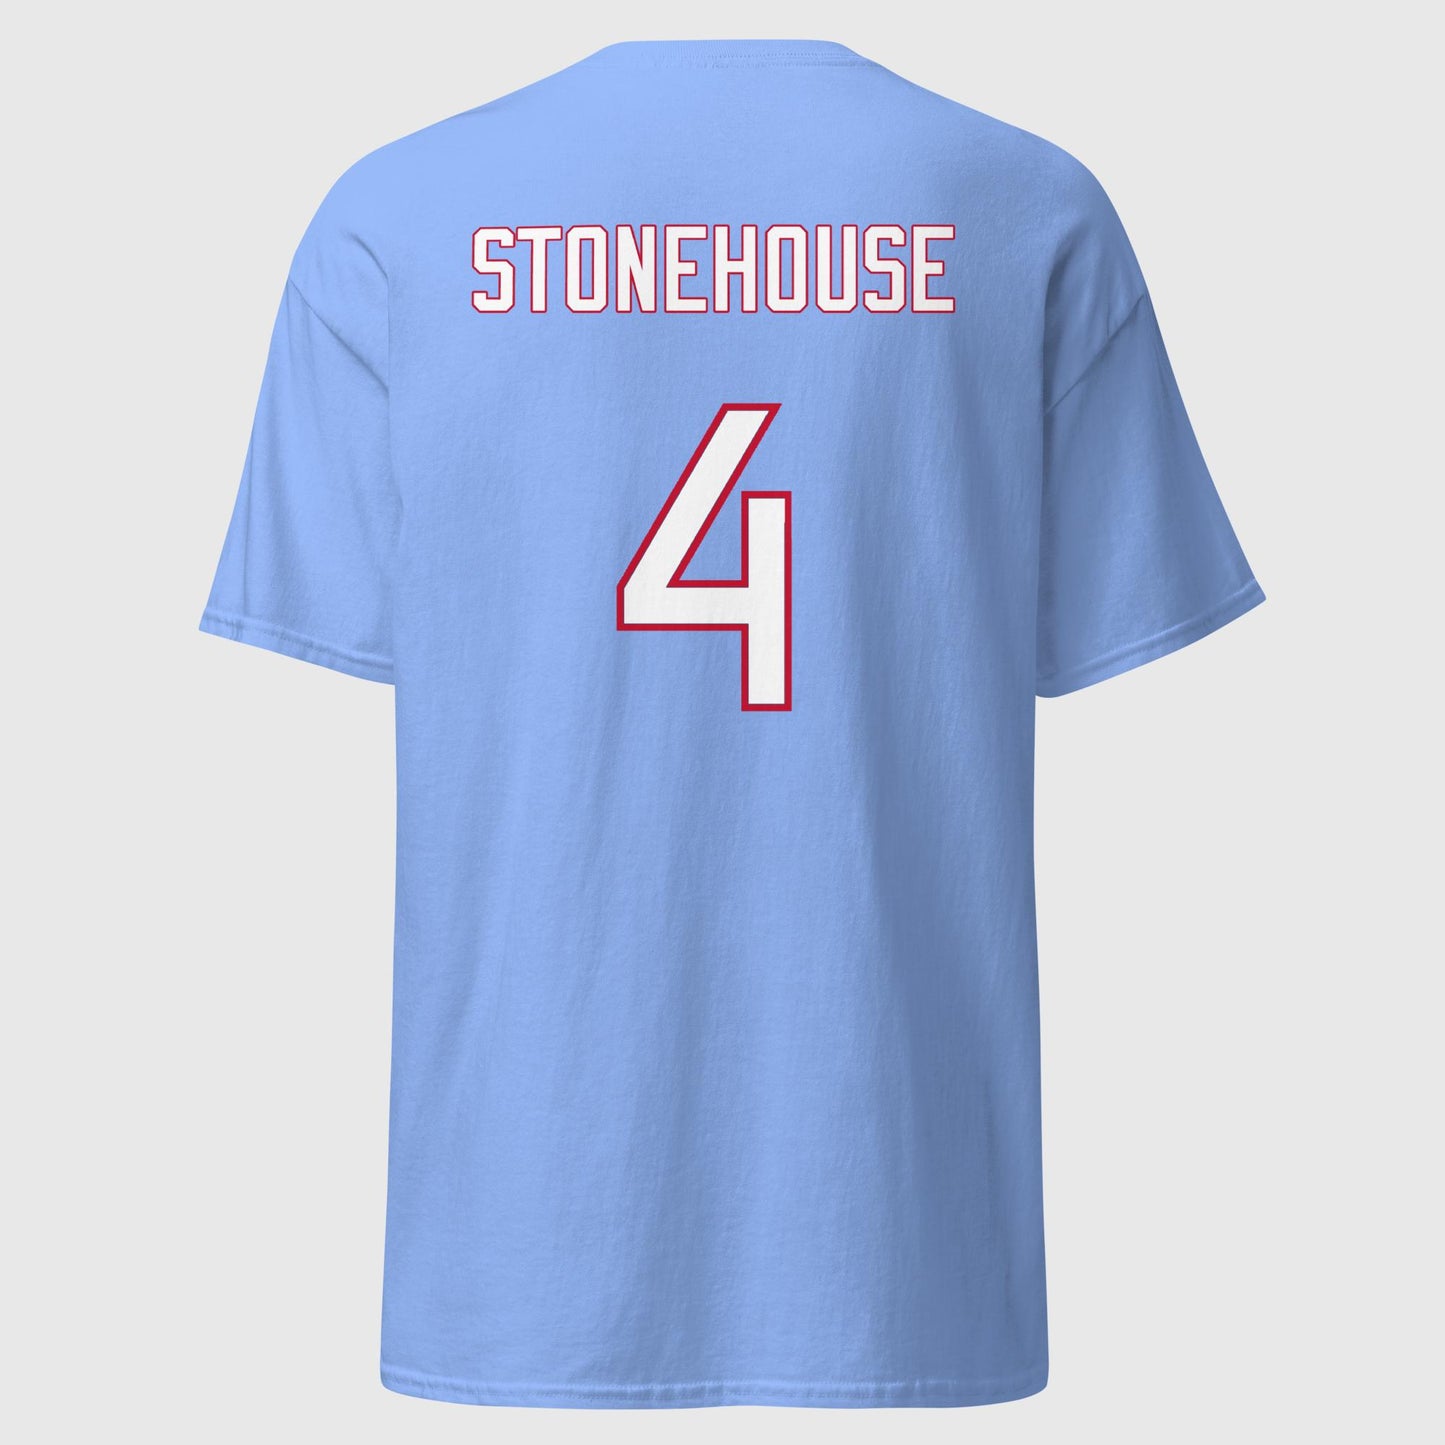 T.O.F.P.D! Stonehouse Light Blue T-Shirt